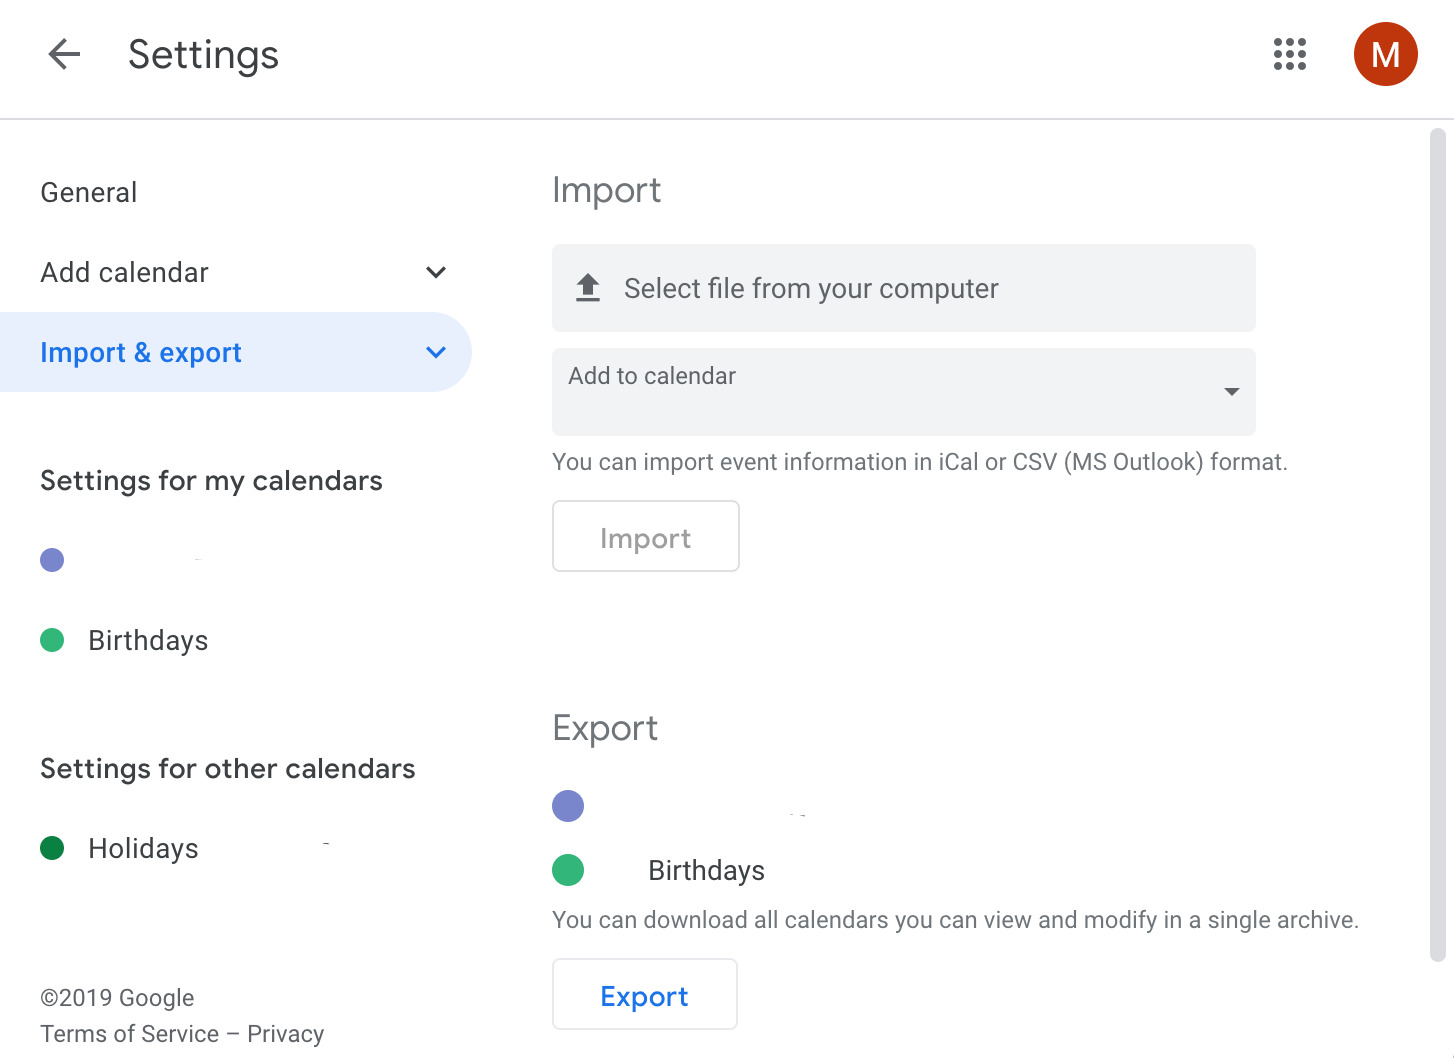 Back Up Your Google Calendar Calendars To ICS Files